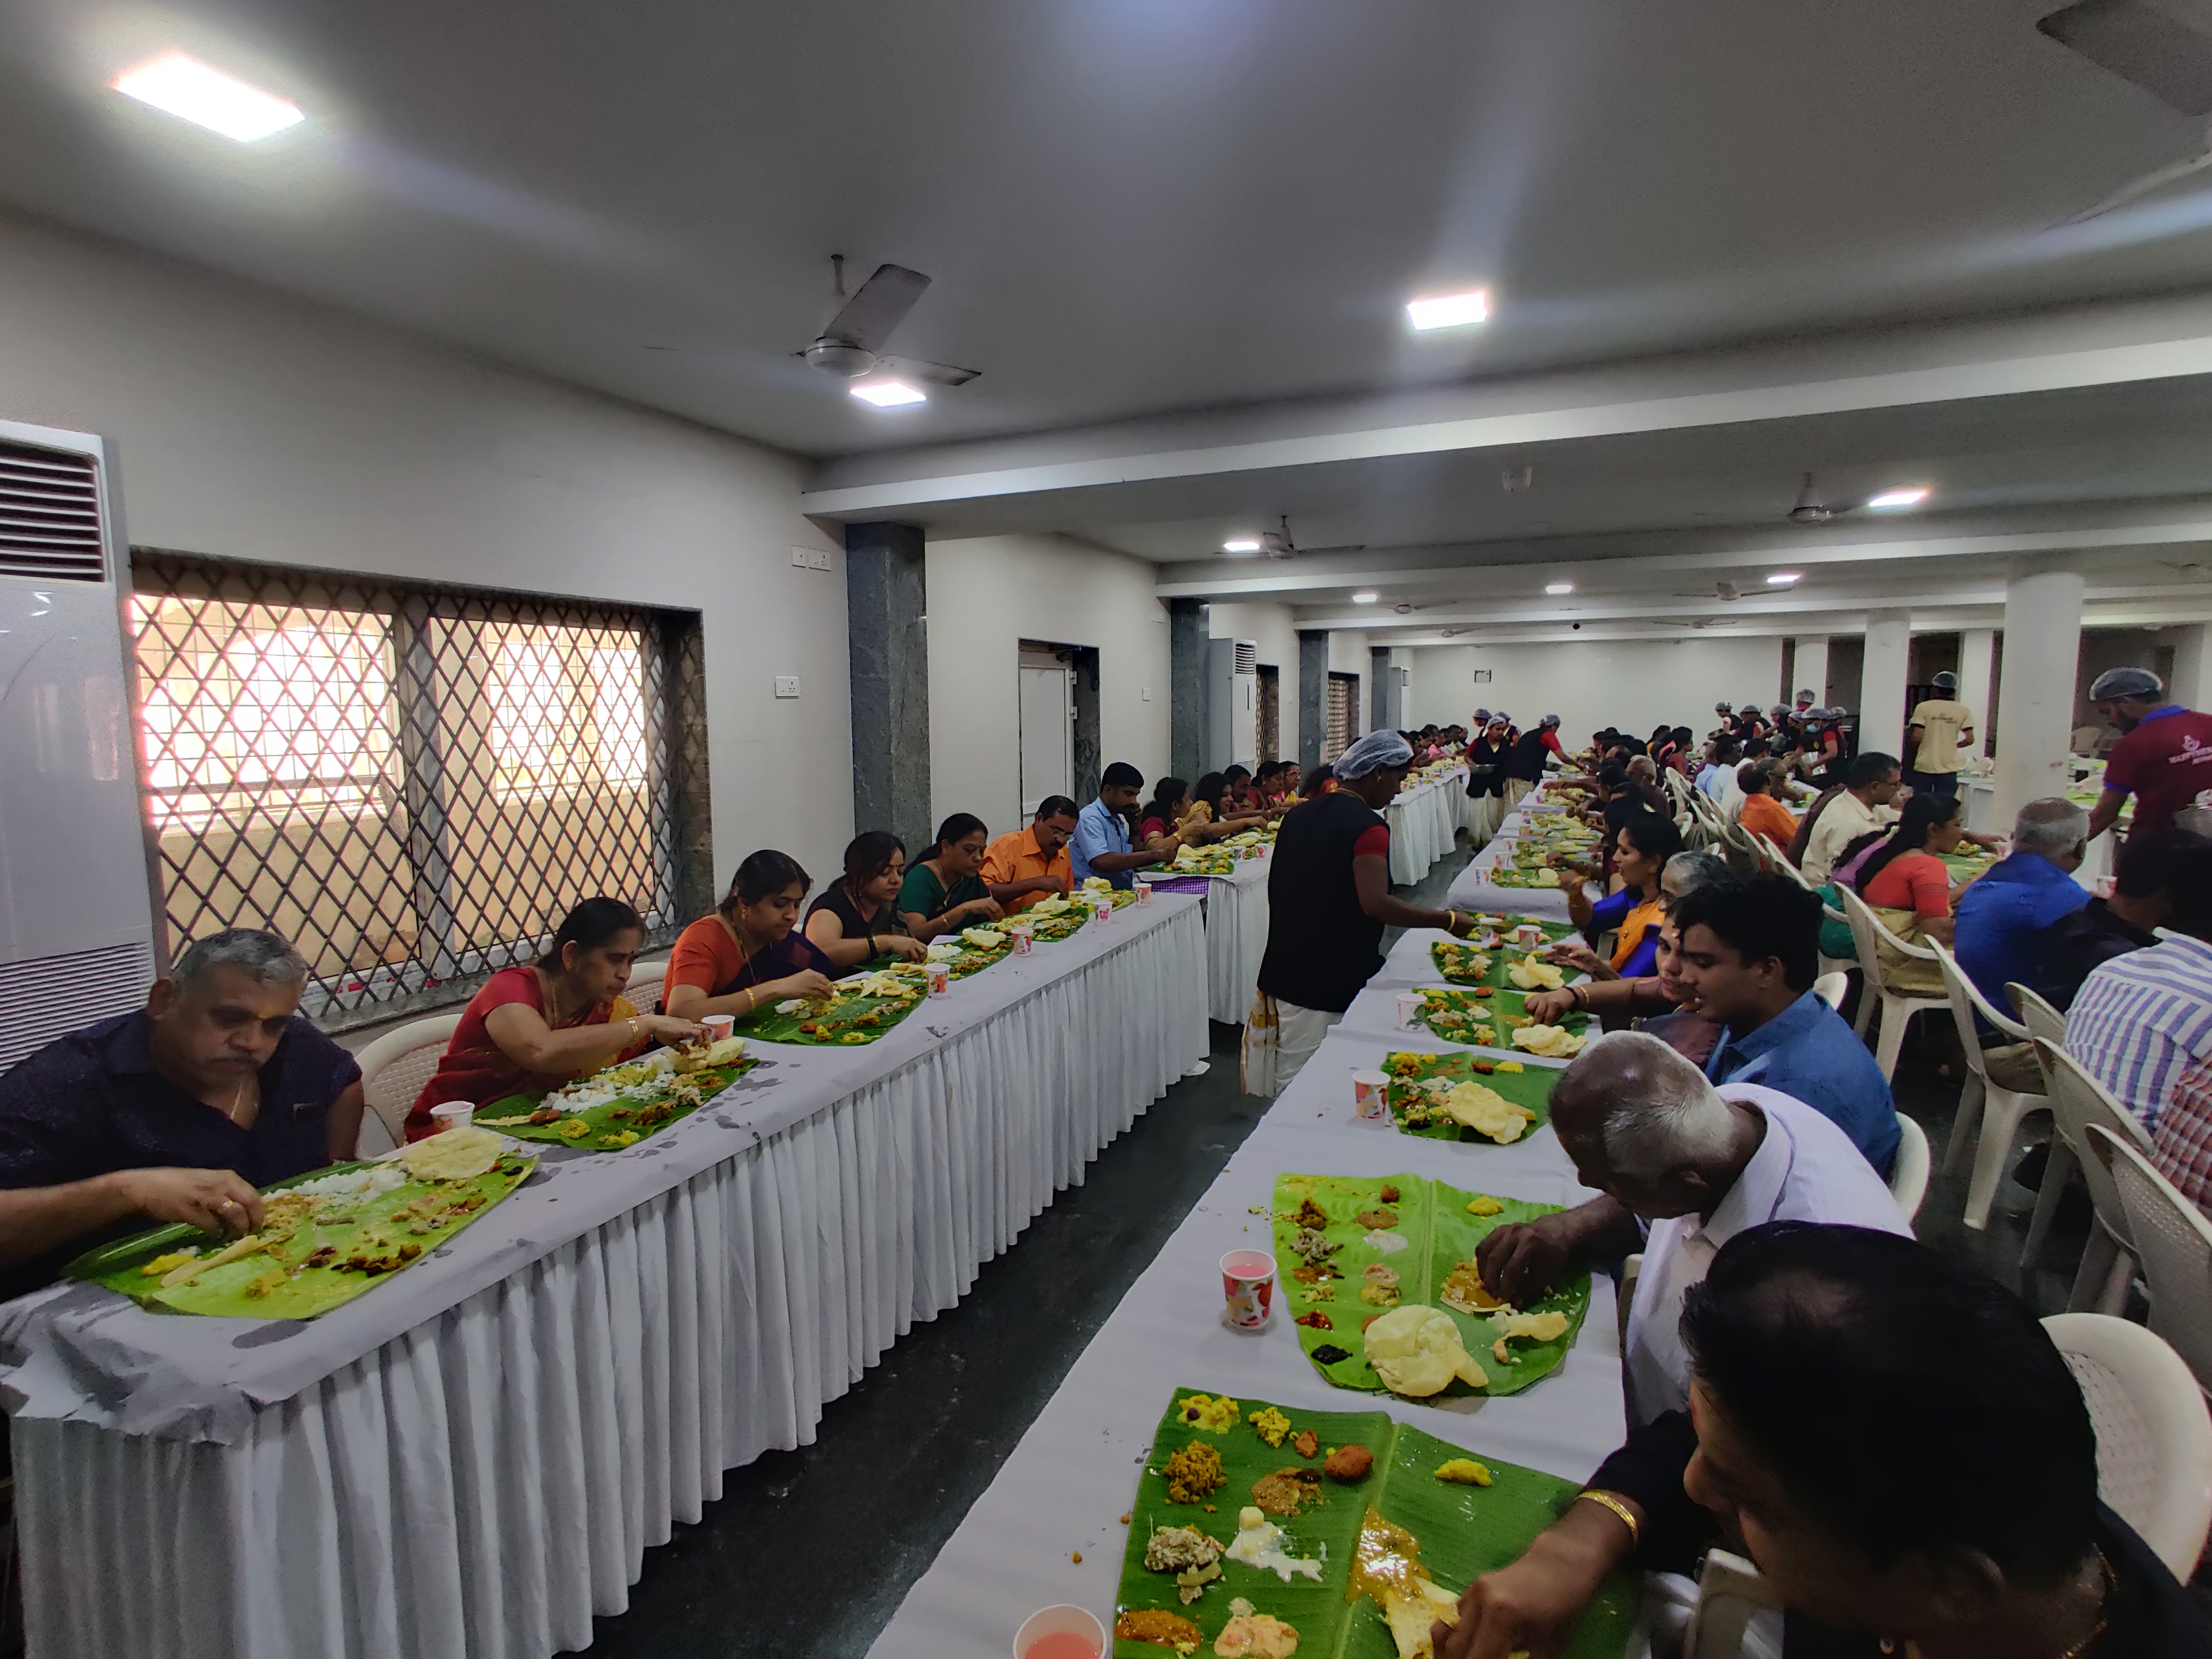 veg sadhya catering in palakkad and coimbatore